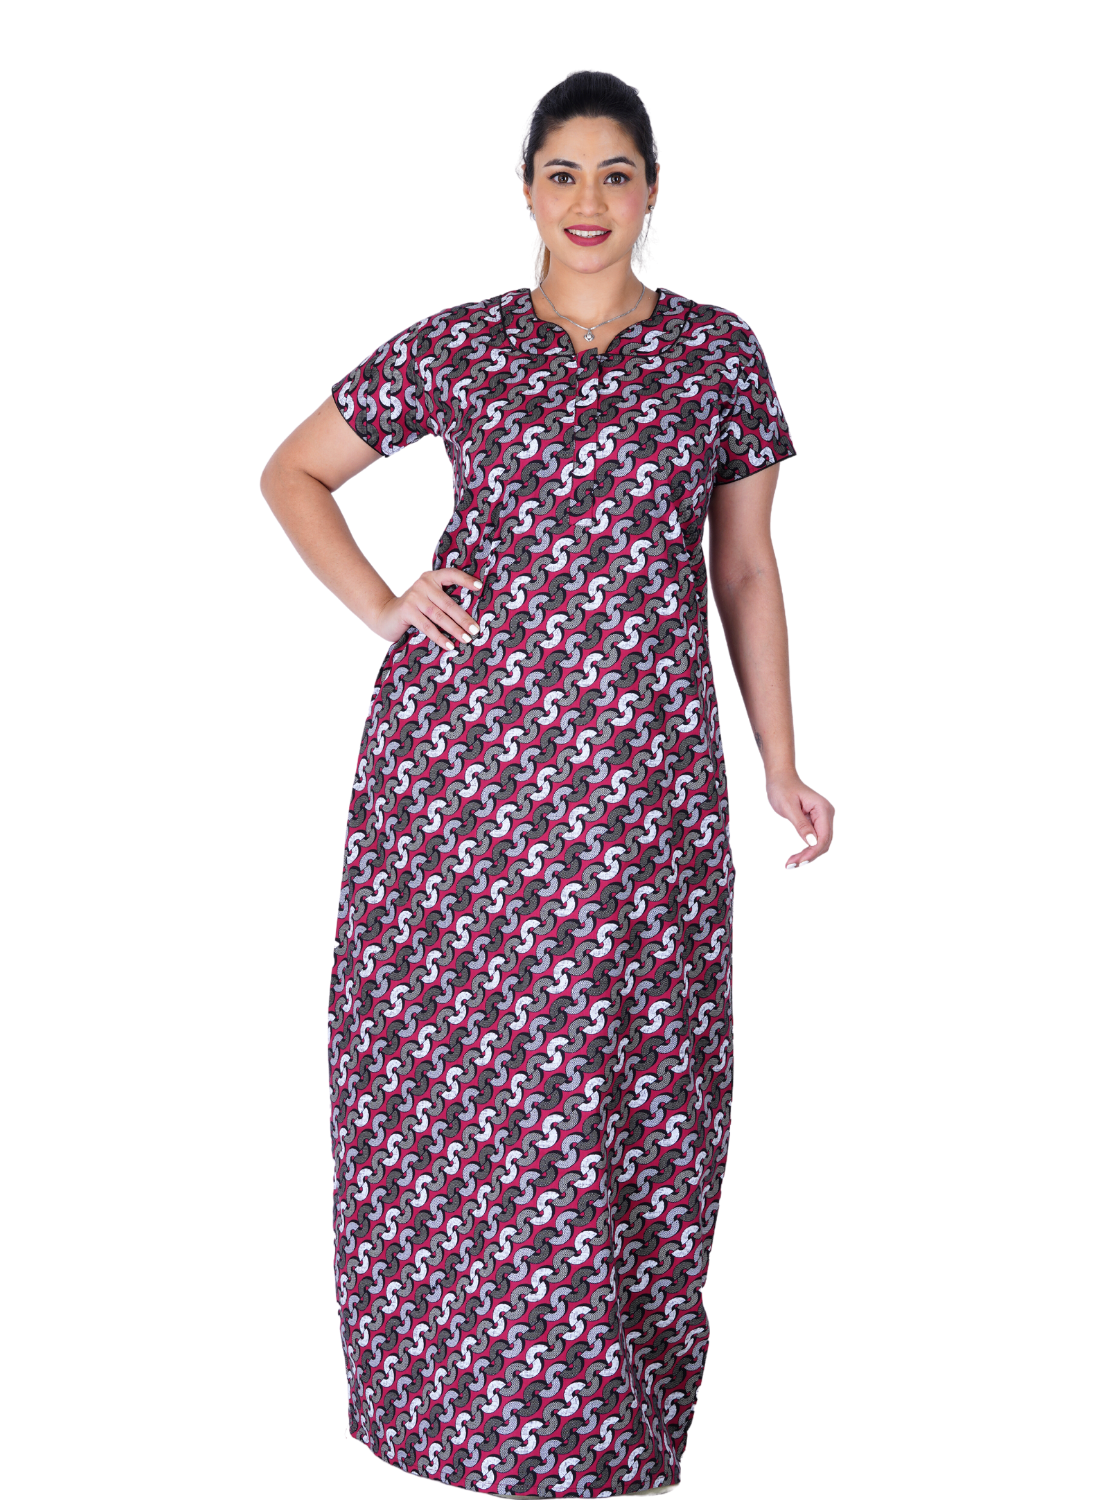 New MANGAI Premium Cotton Nighties- All Over Printed Stylish Nightwear for Stylish Women | Updated Collection's